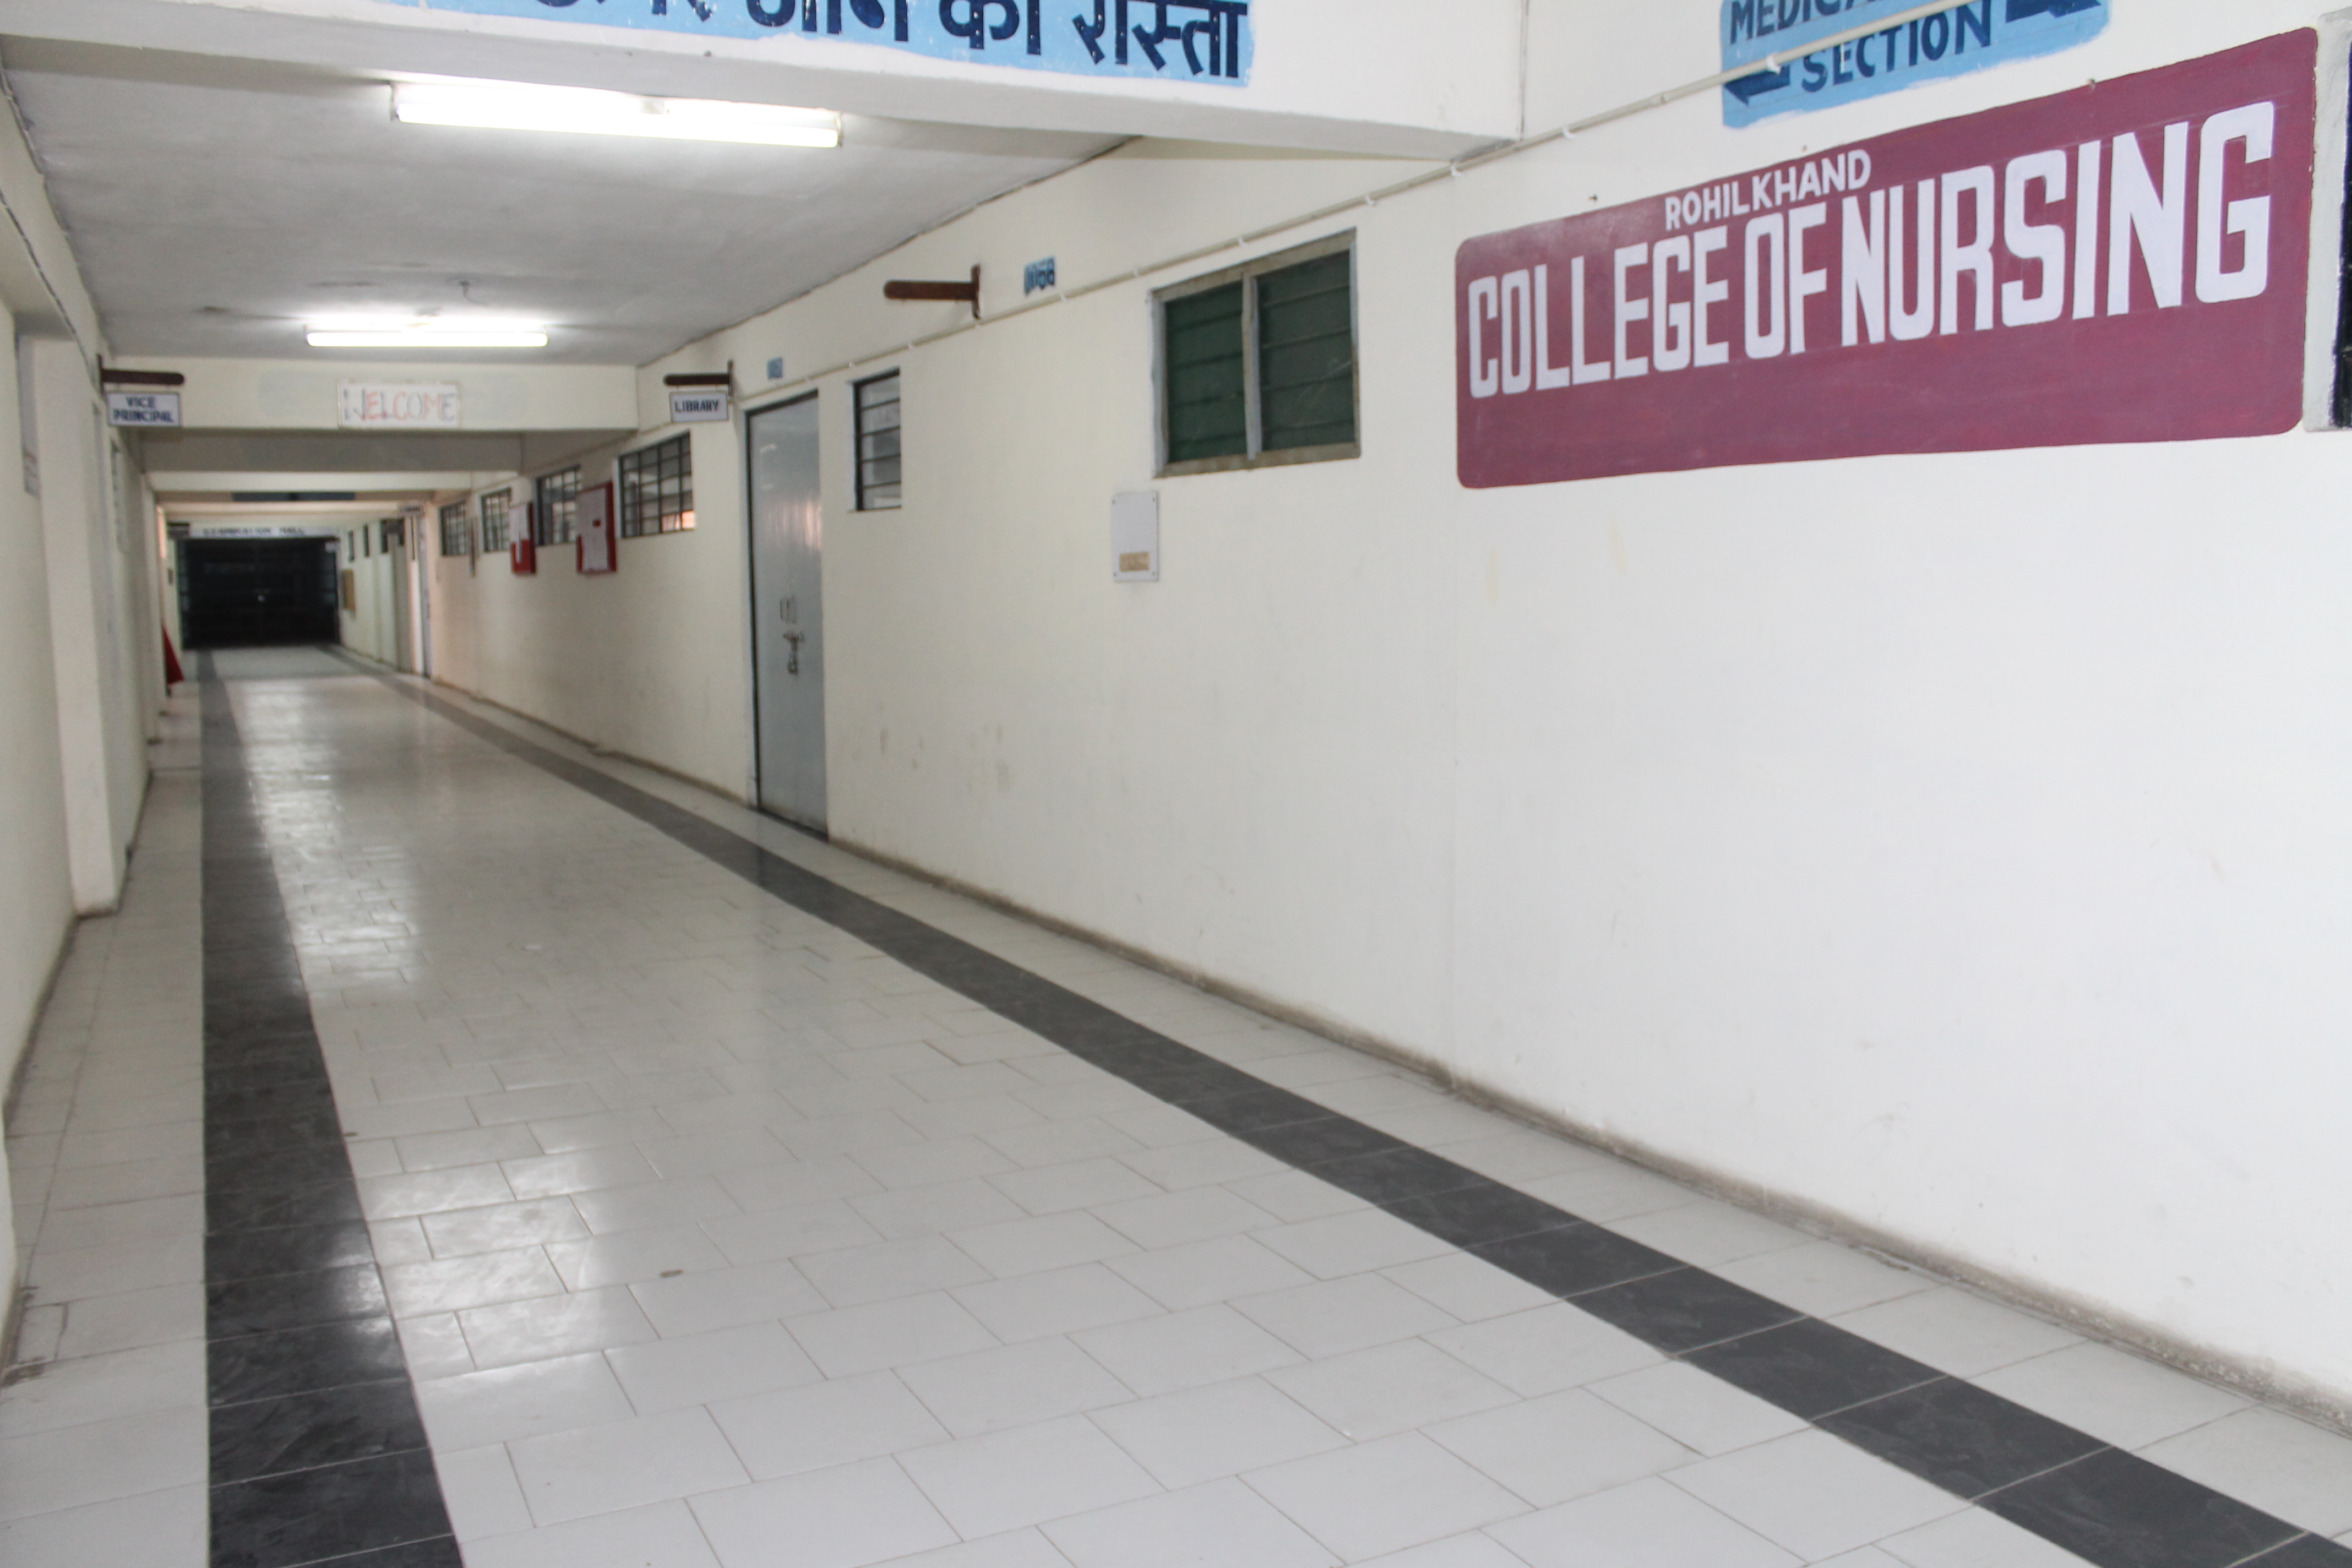 Rohilkhand College Of Nursing Image